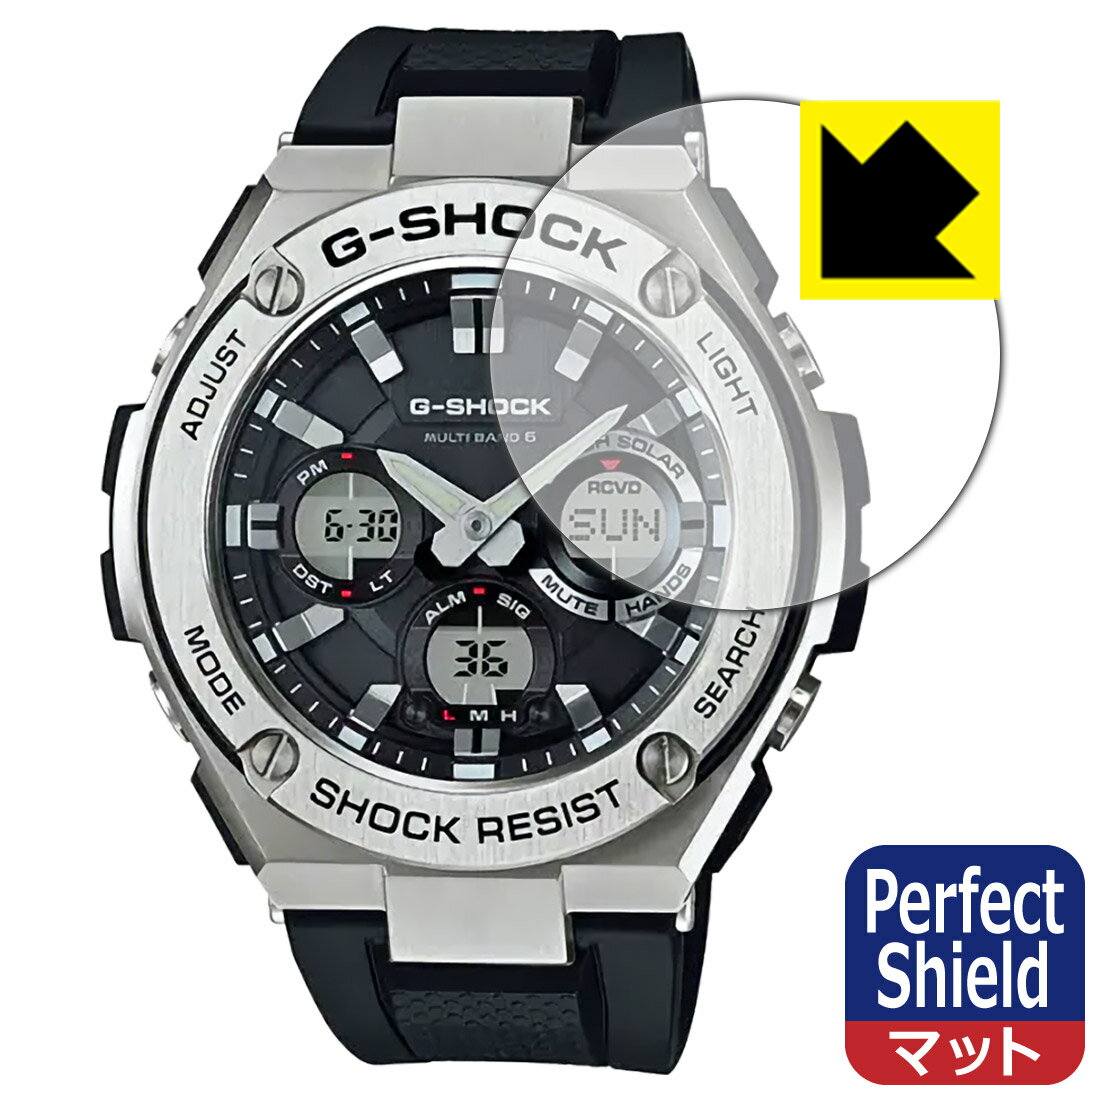 Perfect Shieldy˒ጸzیtB G-SHOCK GST-W110 / GST-W130 { А